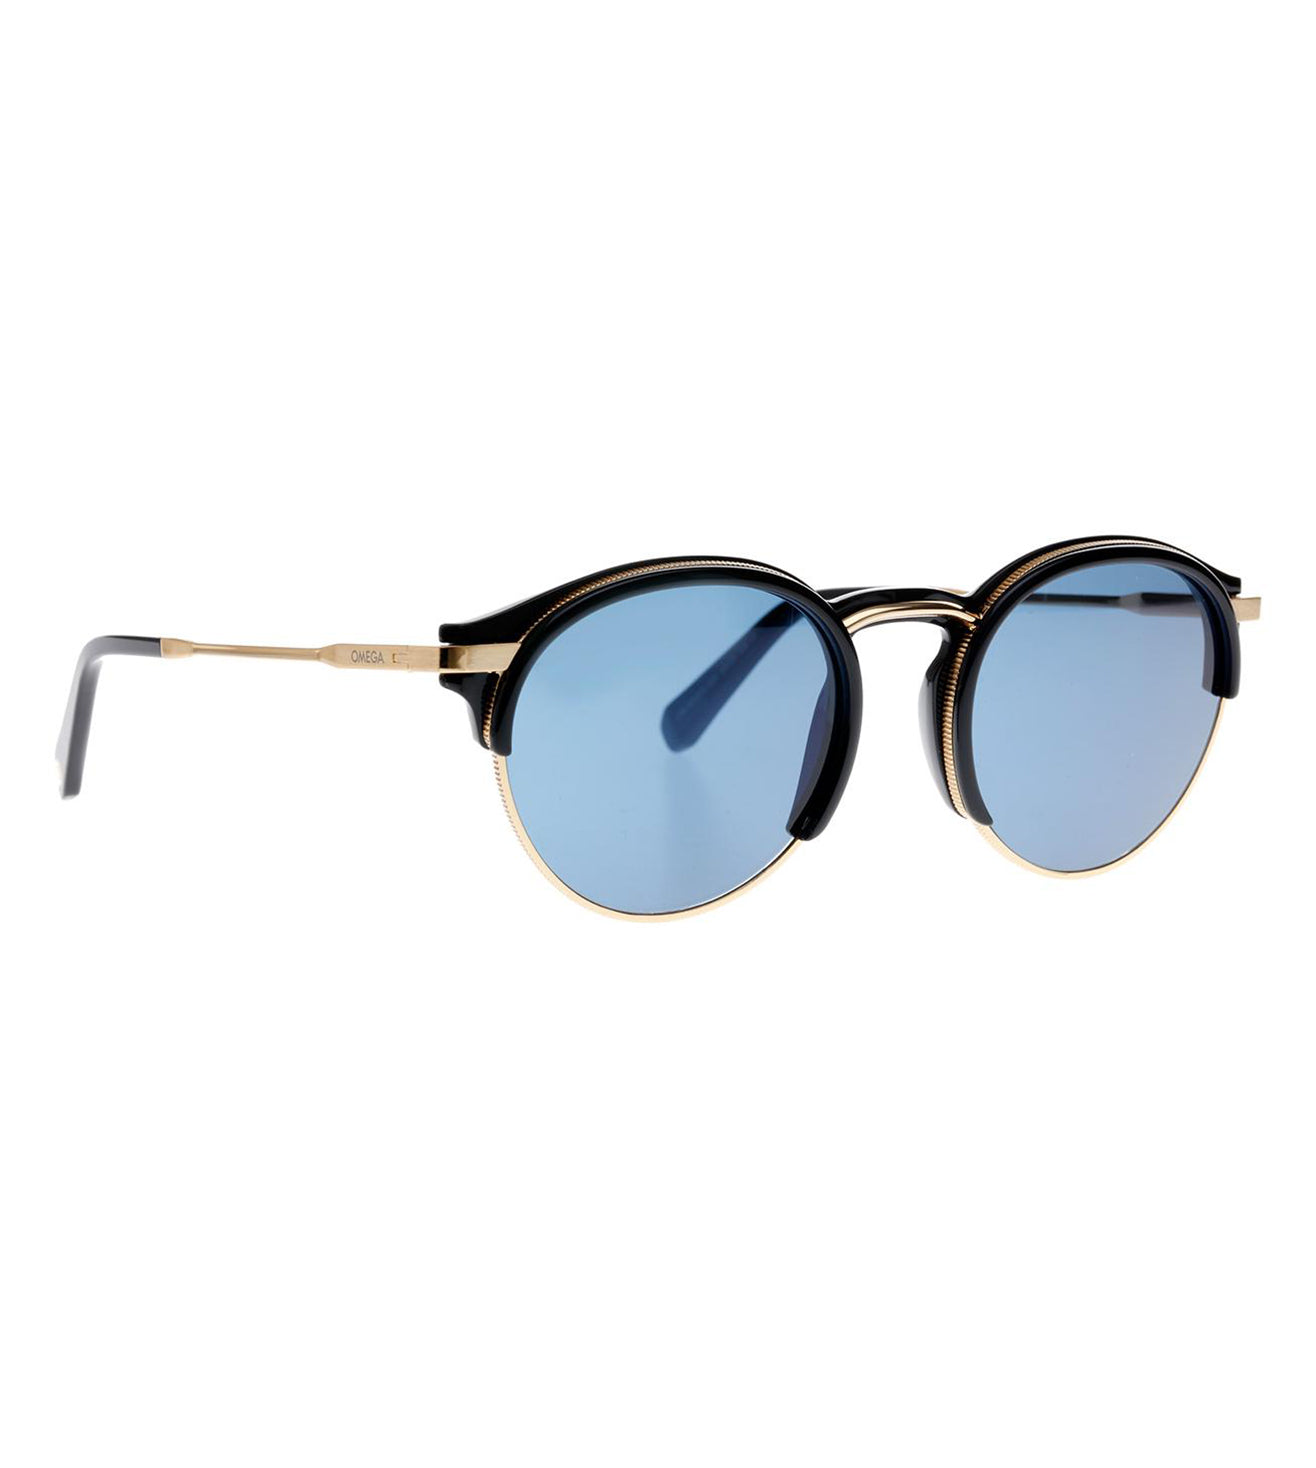 Omega Men's Blue Round Sunglasses